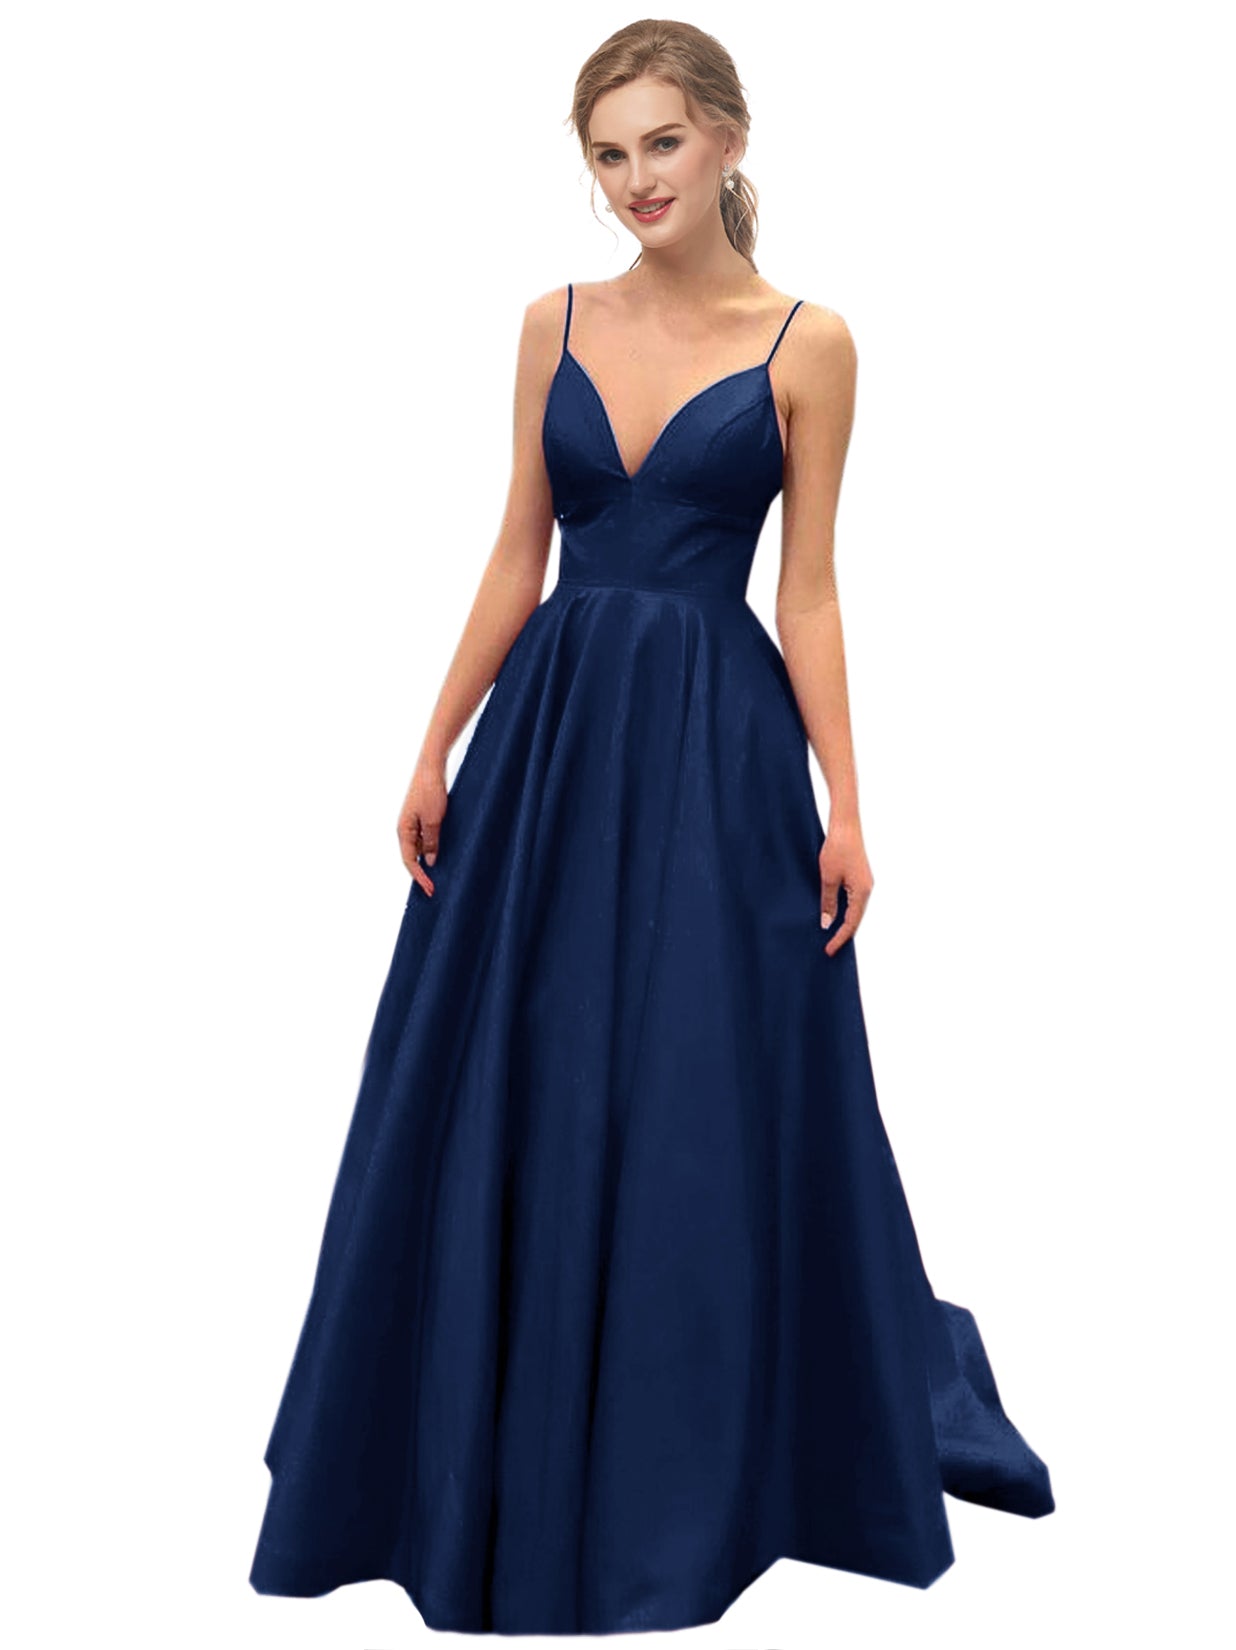 Satin A-Line Spaghetti Straps Sleeveless Prom Dress-GD102175